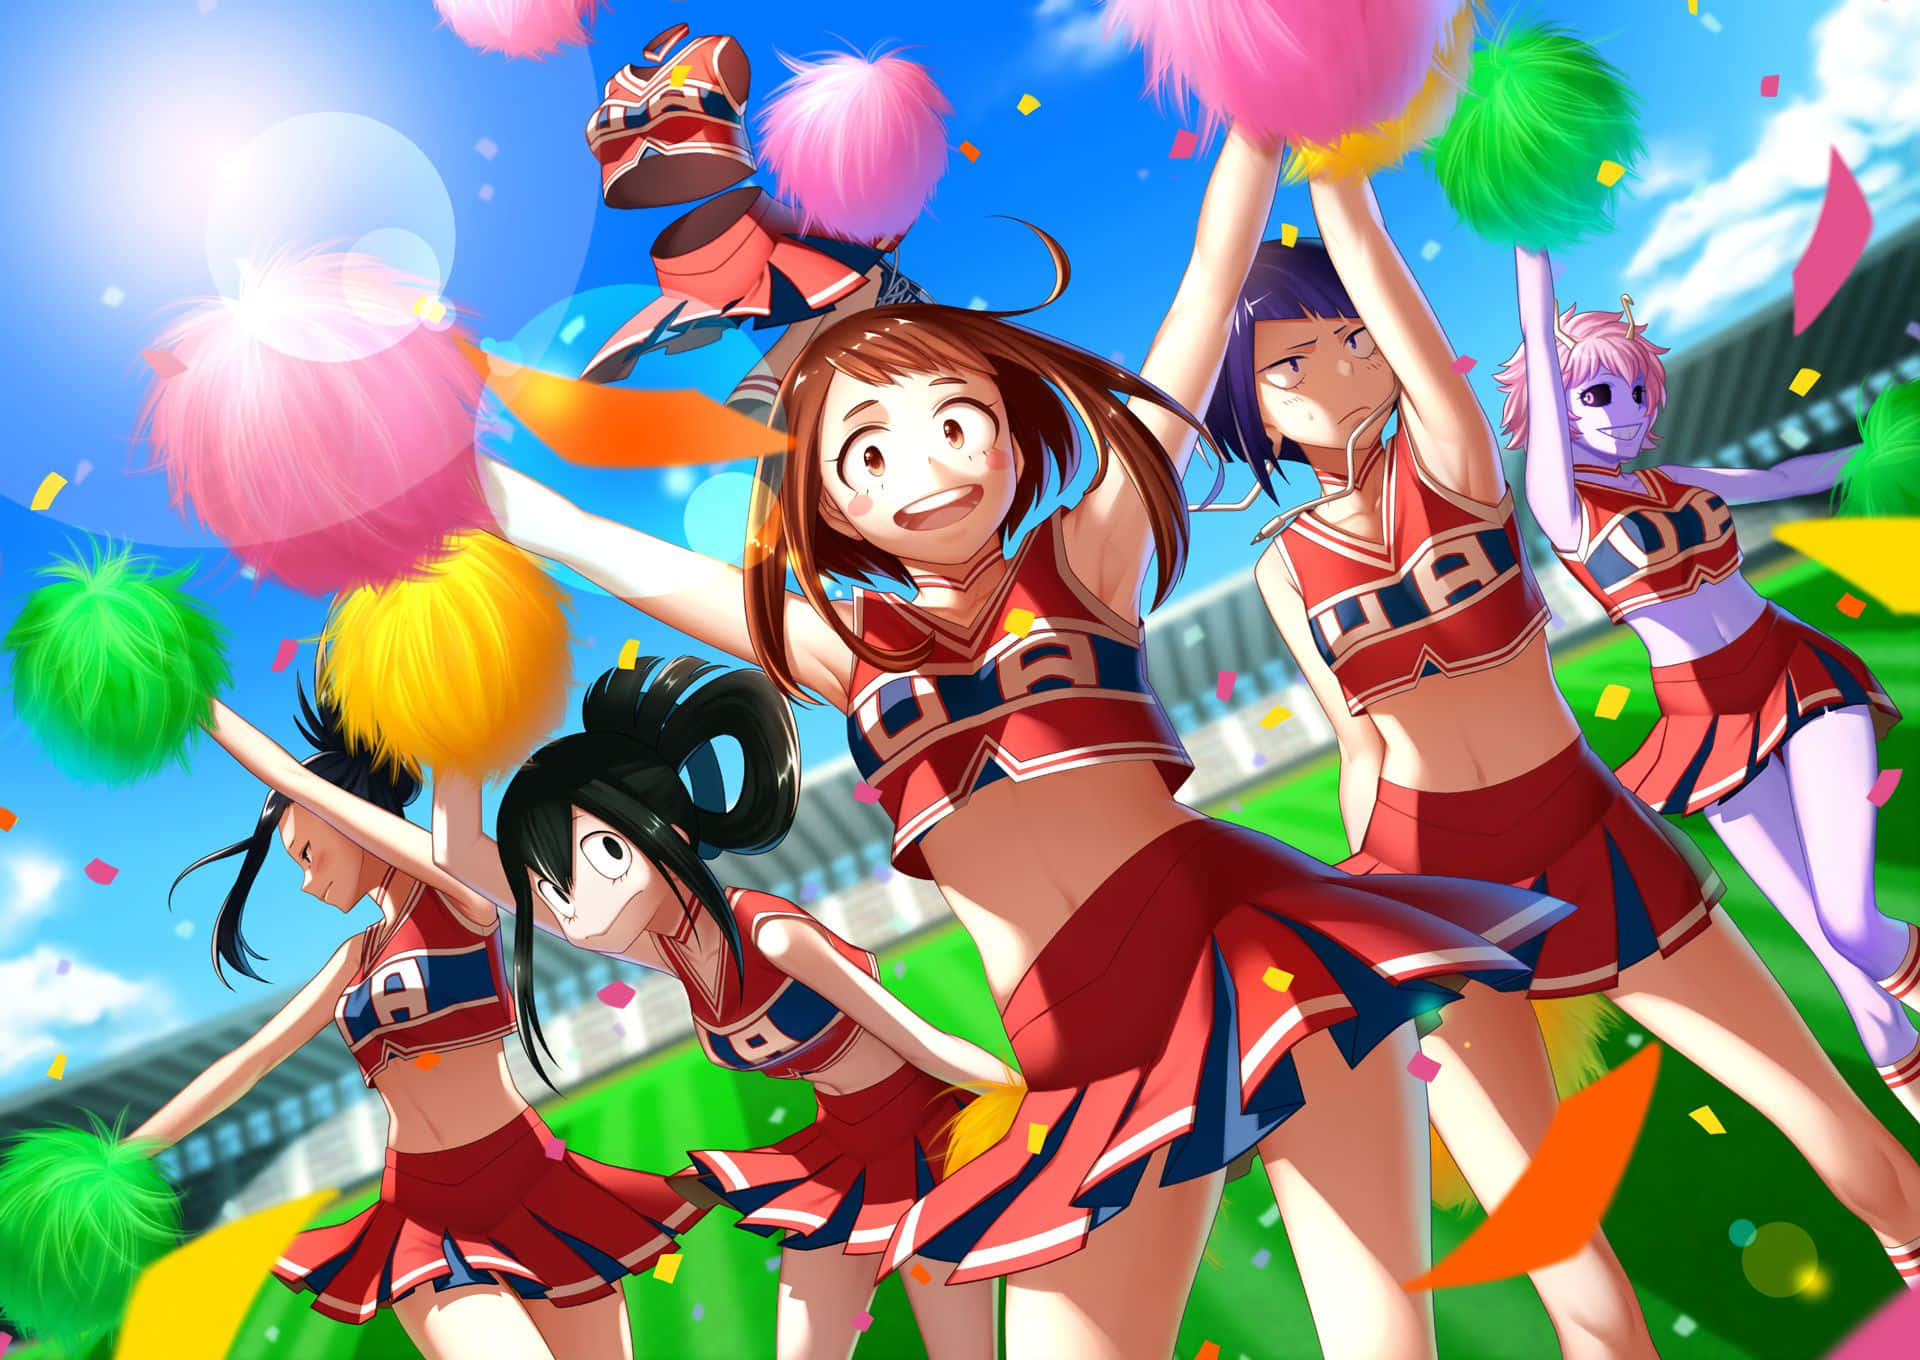 Animated Cheerleading Squad Performance.jpg Wallpaper